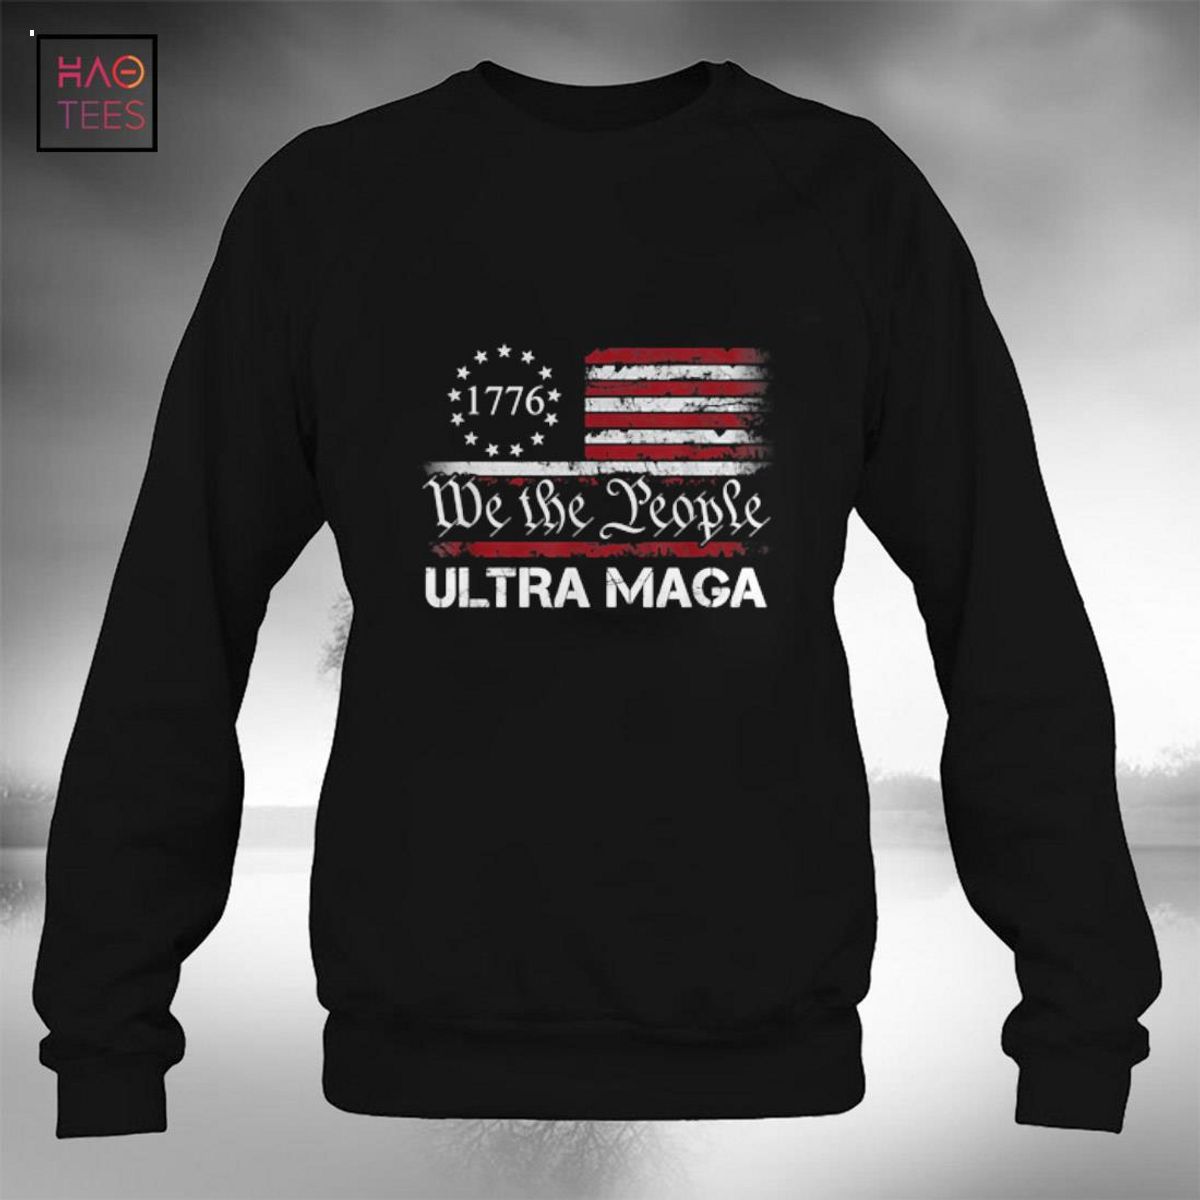 Ultra MAGA - We The People Proud Republican USA Flag Shirt